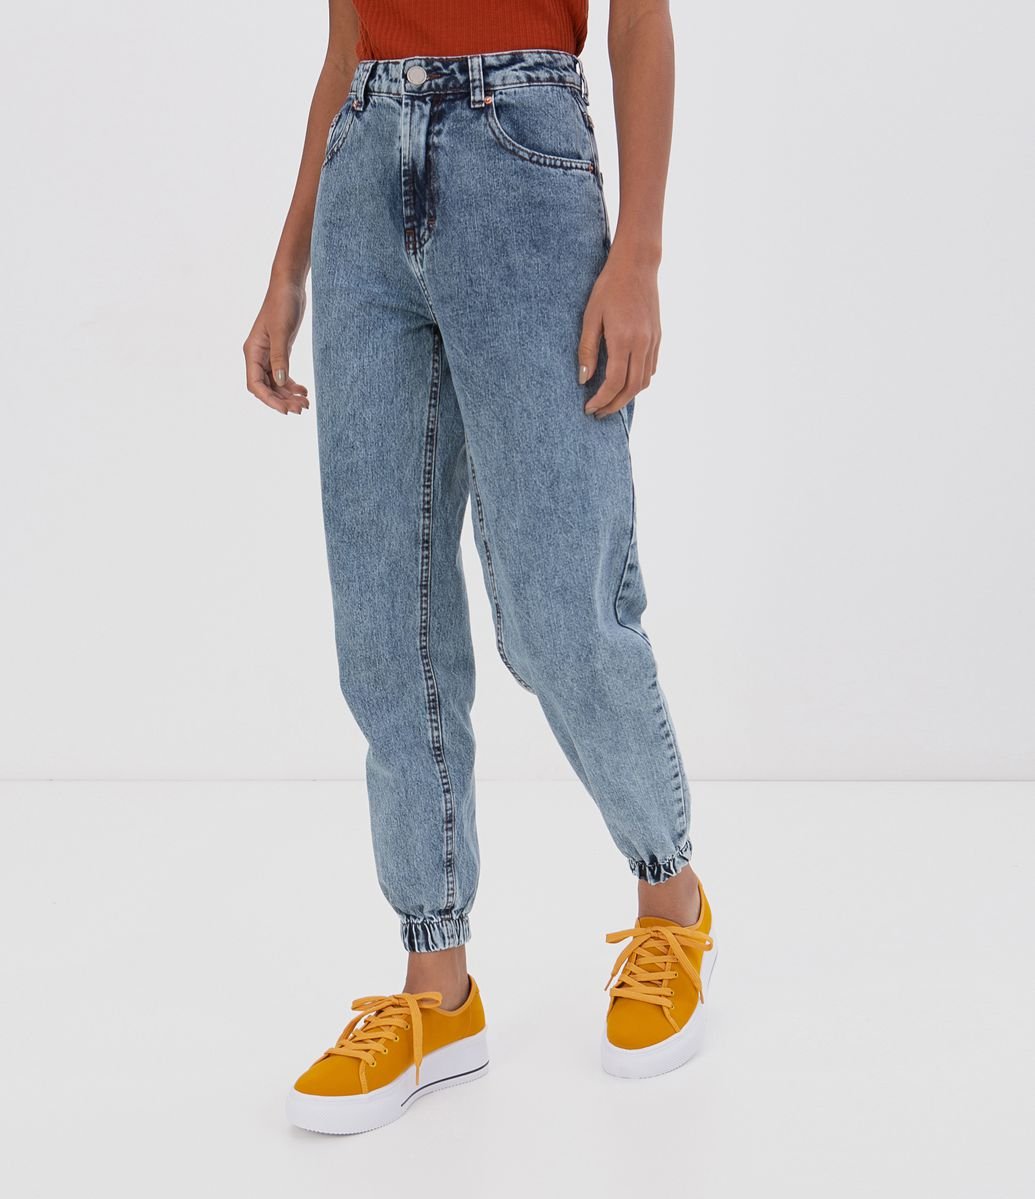 lojas renner calça jeans